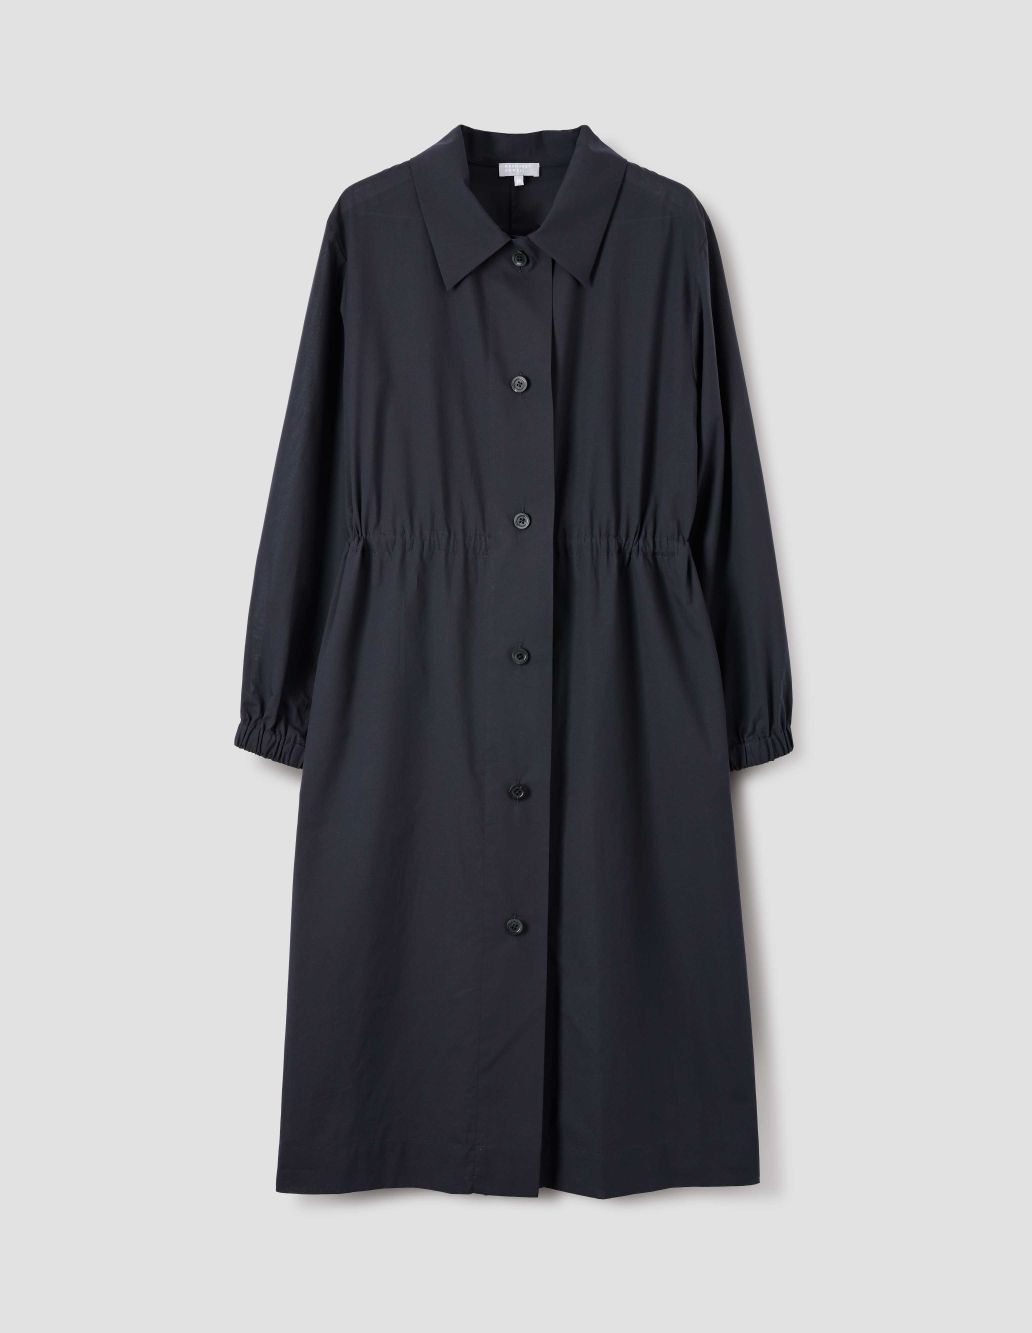 MARGARET HOWELL - Black washed cotton drawcord dress | Margaret Howell